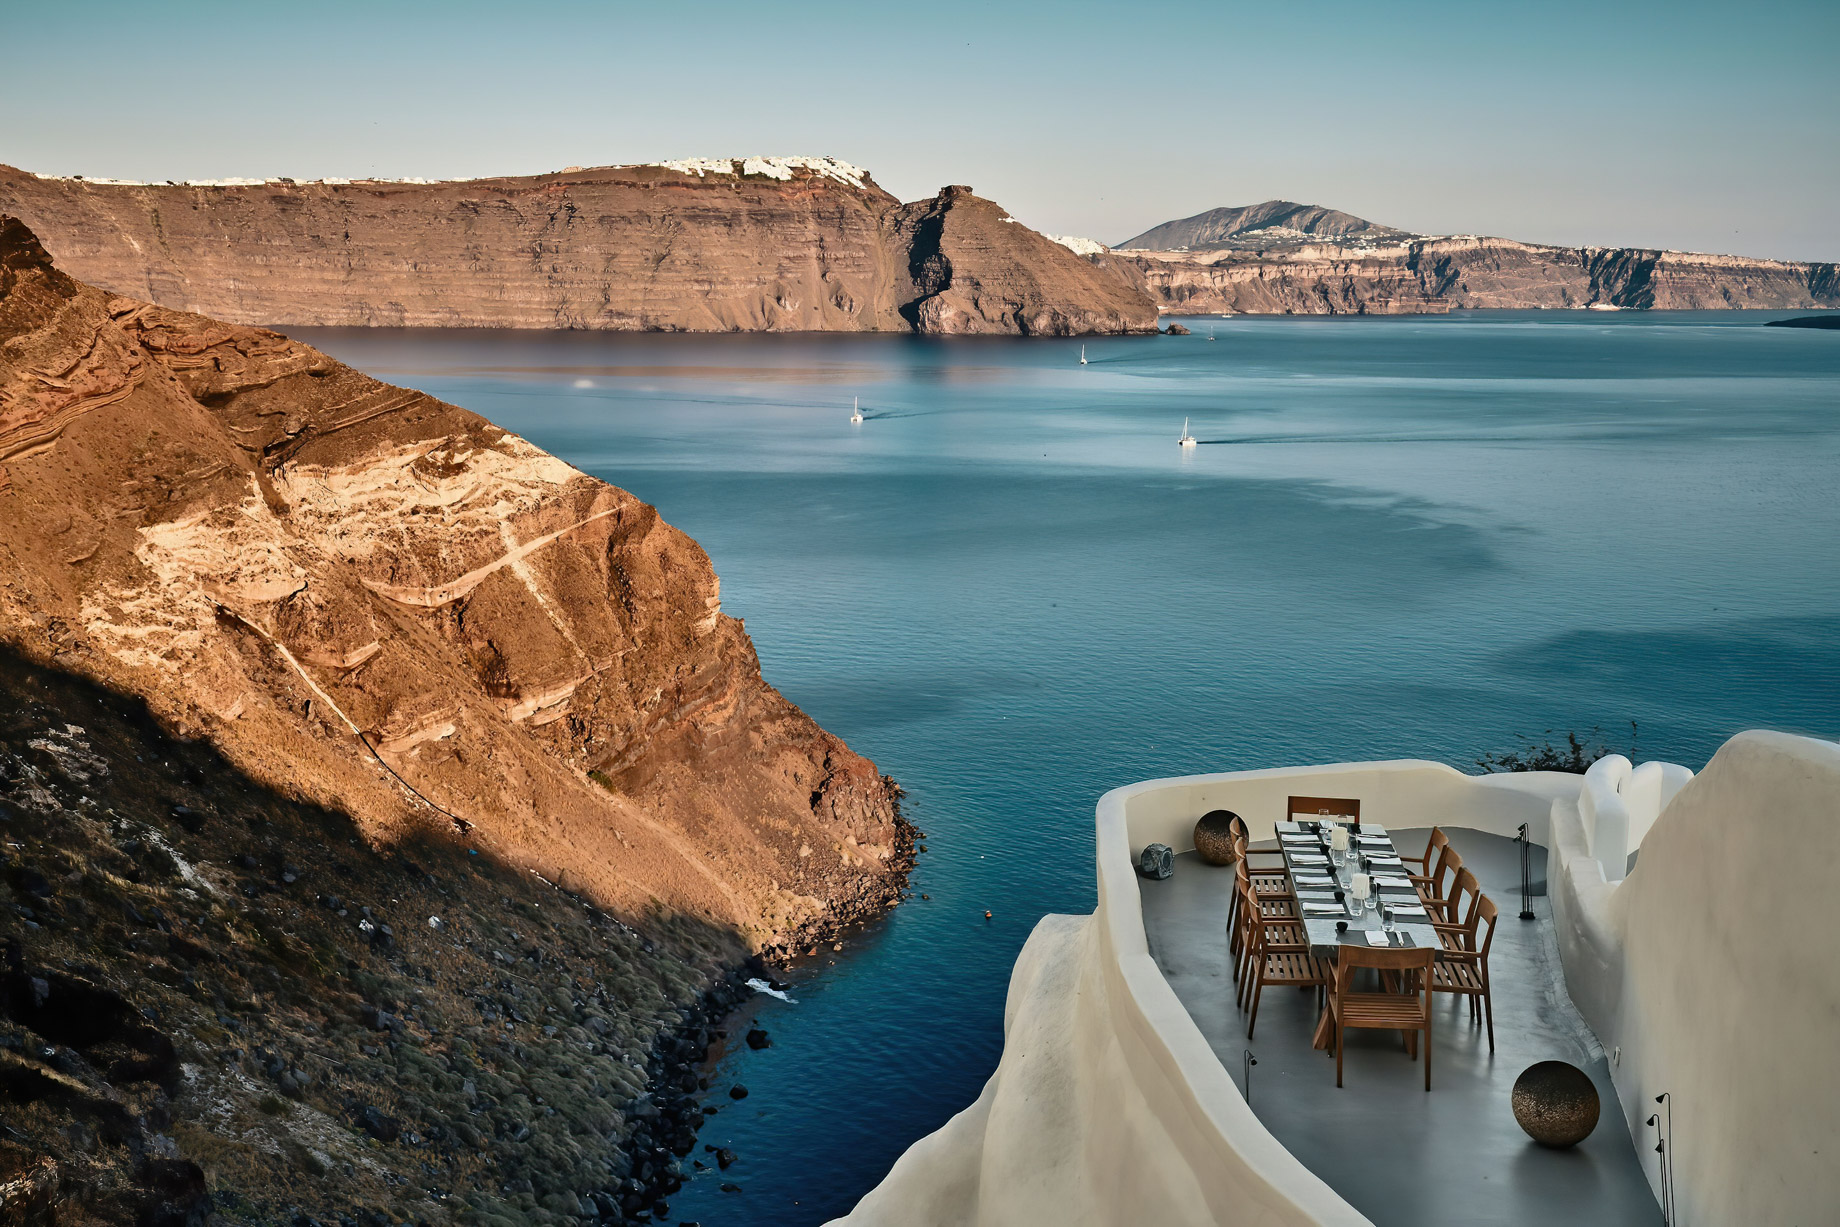 Mystique Hotel Santorini – Oia, Santorini Island, Greece – Cliffside ASEA Lounge Restaurant Ocean View